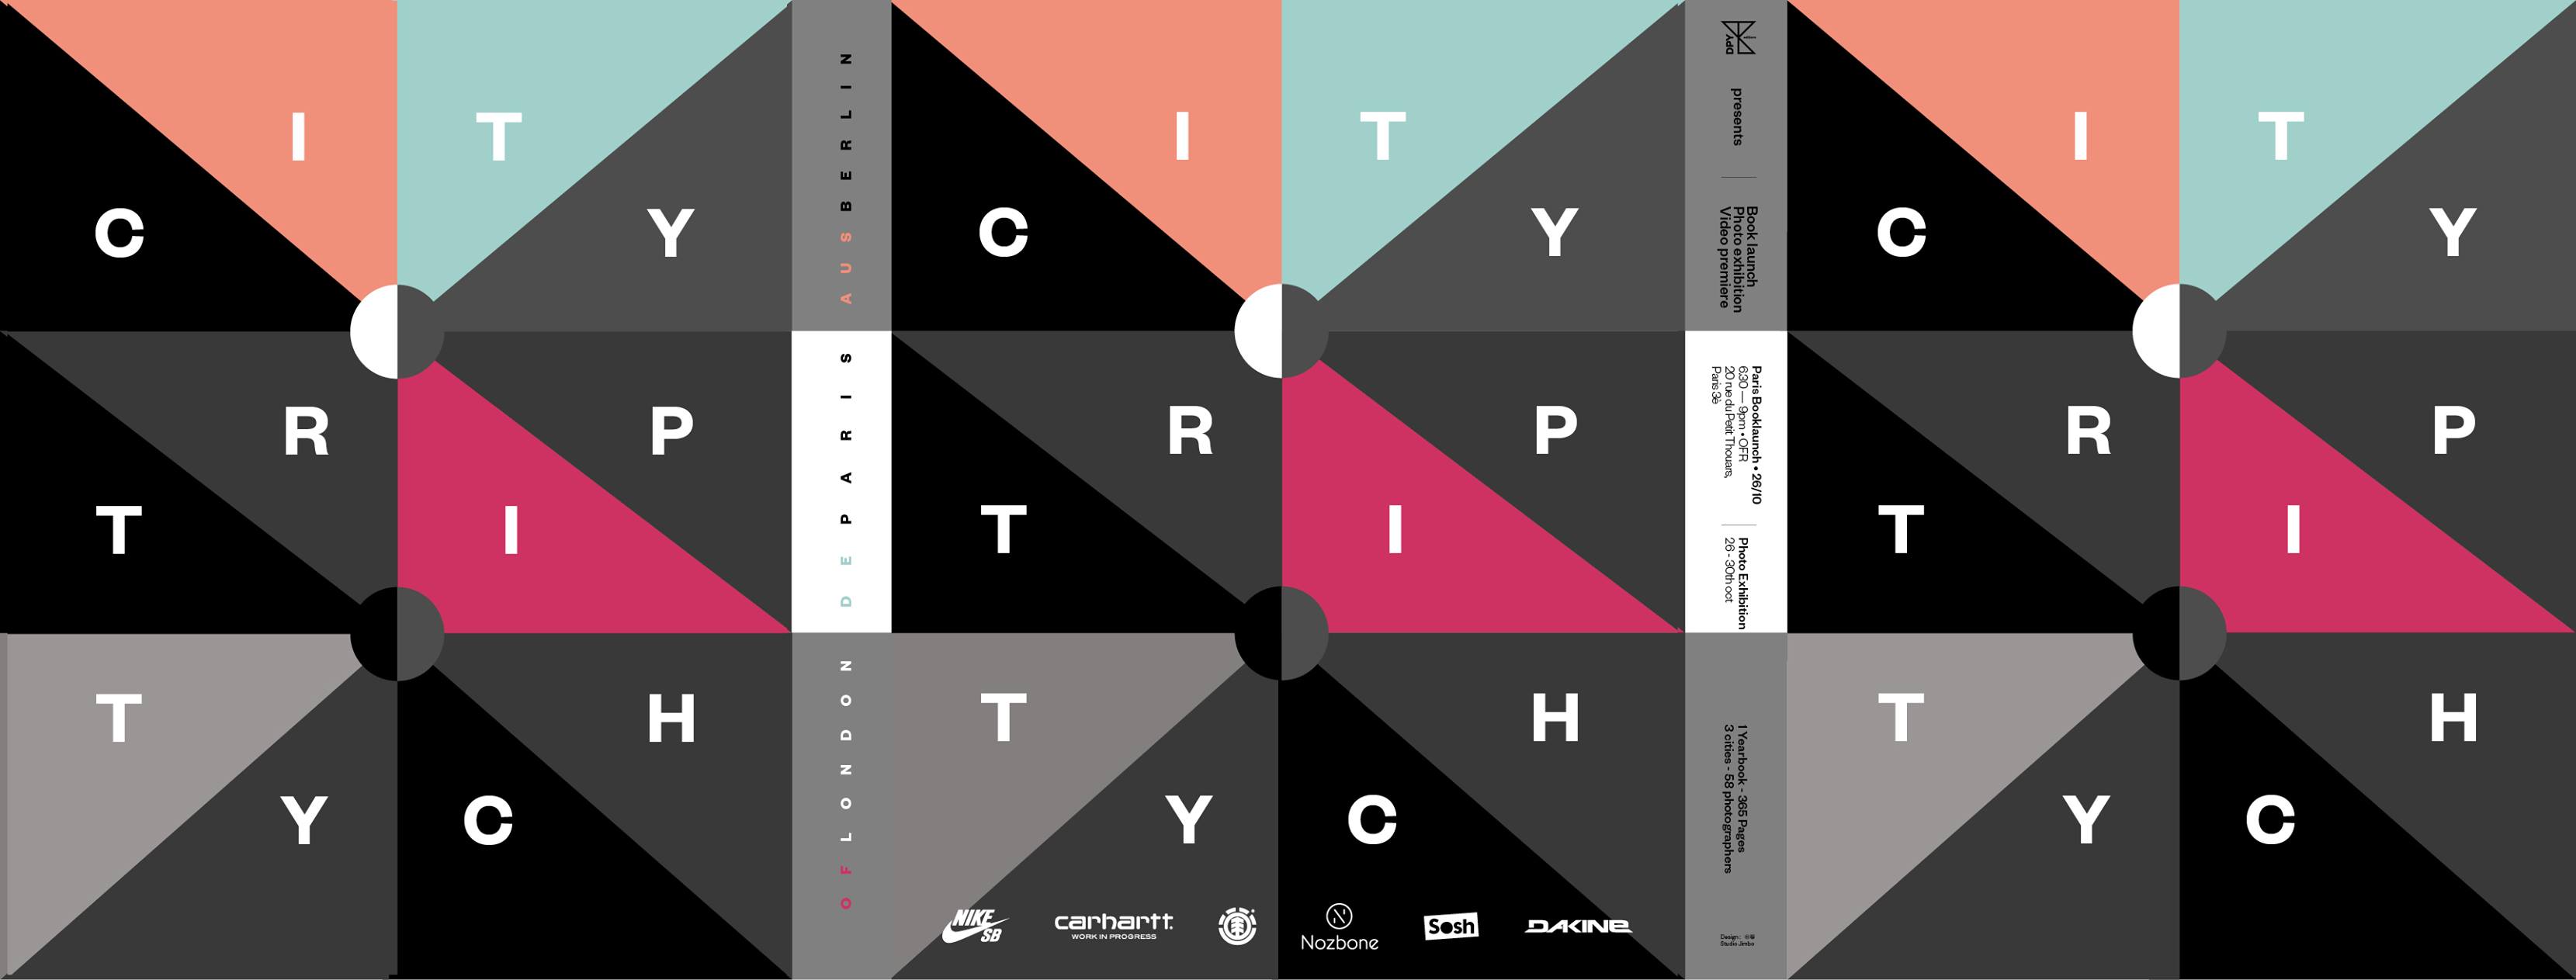 DPY City Triptych – PARIS Booklaunch – 26/10/2017